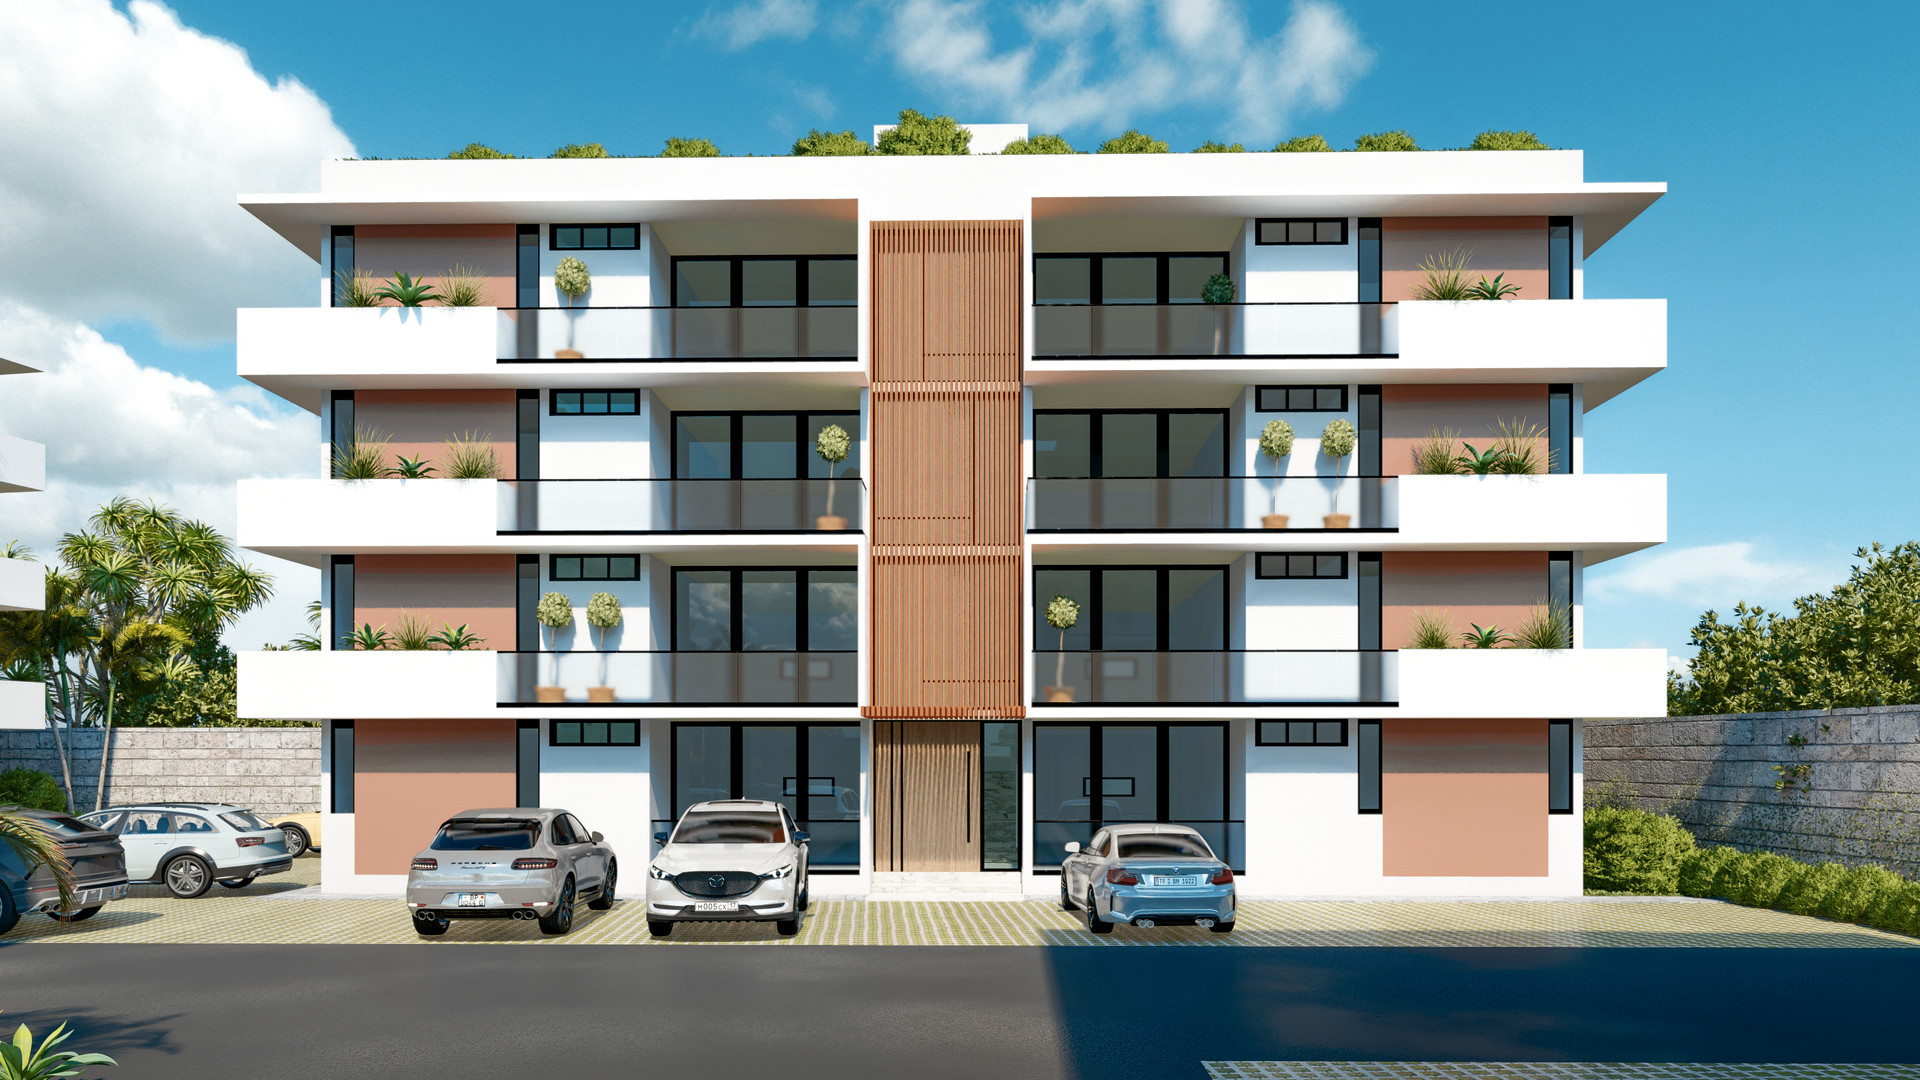 apartamentos - Vendo proyecto en planos en Gurabo con excelente ubicación